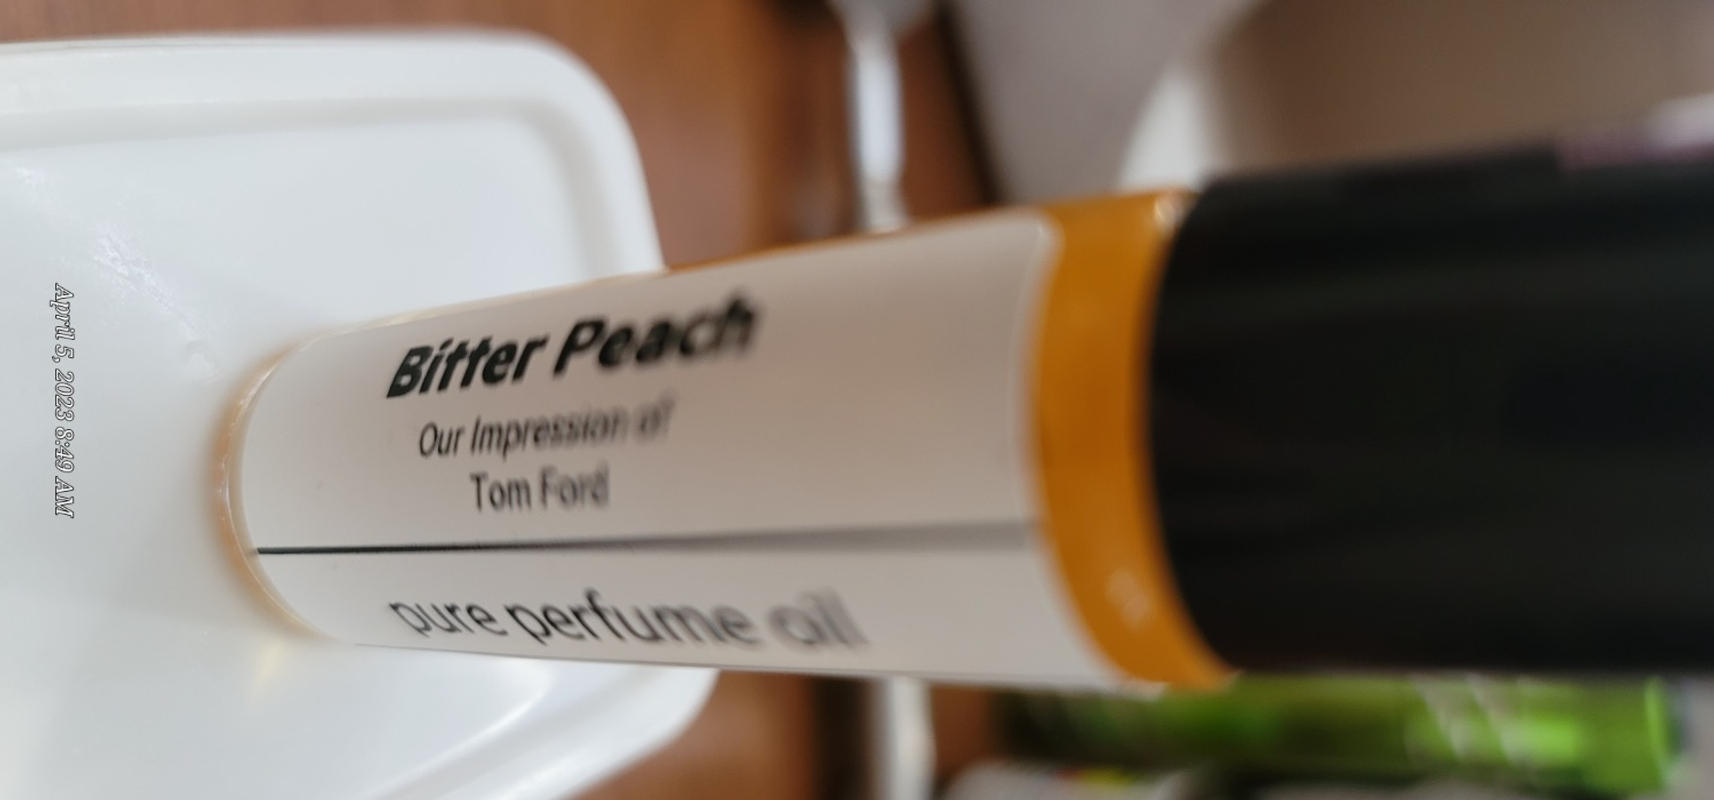 Tom Ford - Bitter Peach - Oil Perfumery